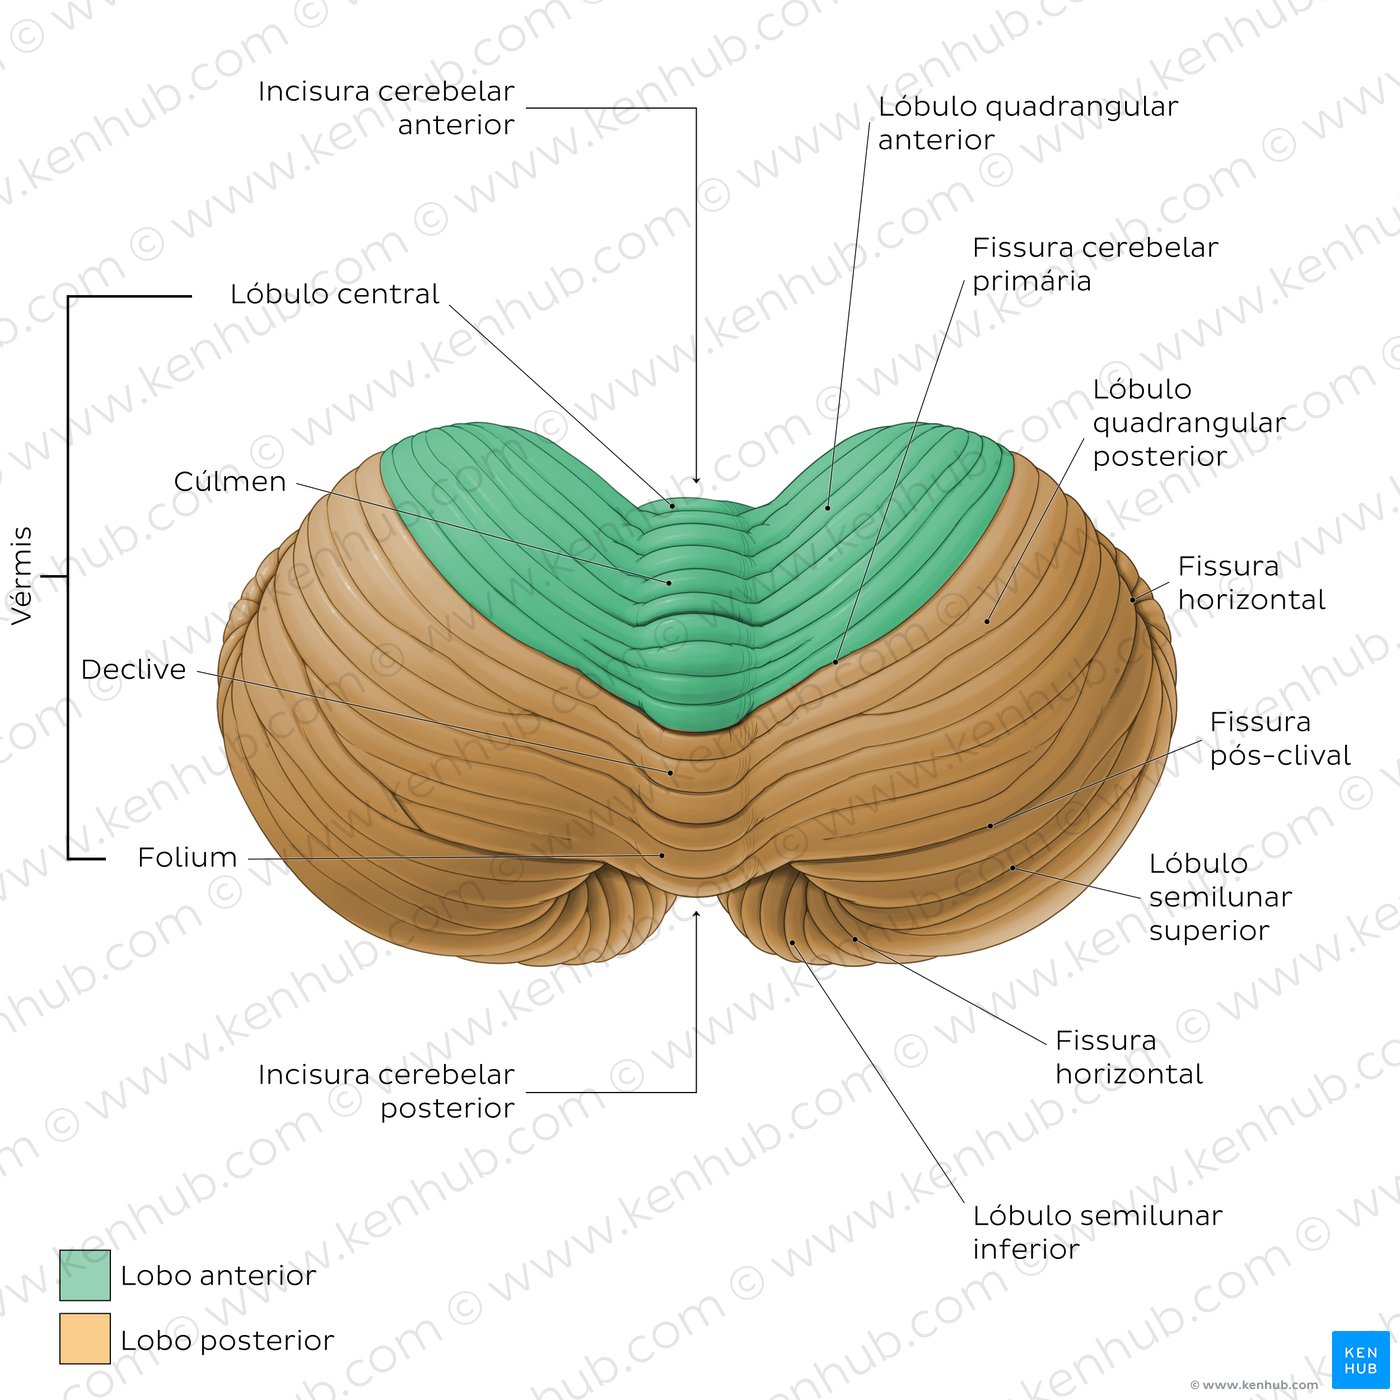 Anatomia do Cerebelo - vista anterior e posterior